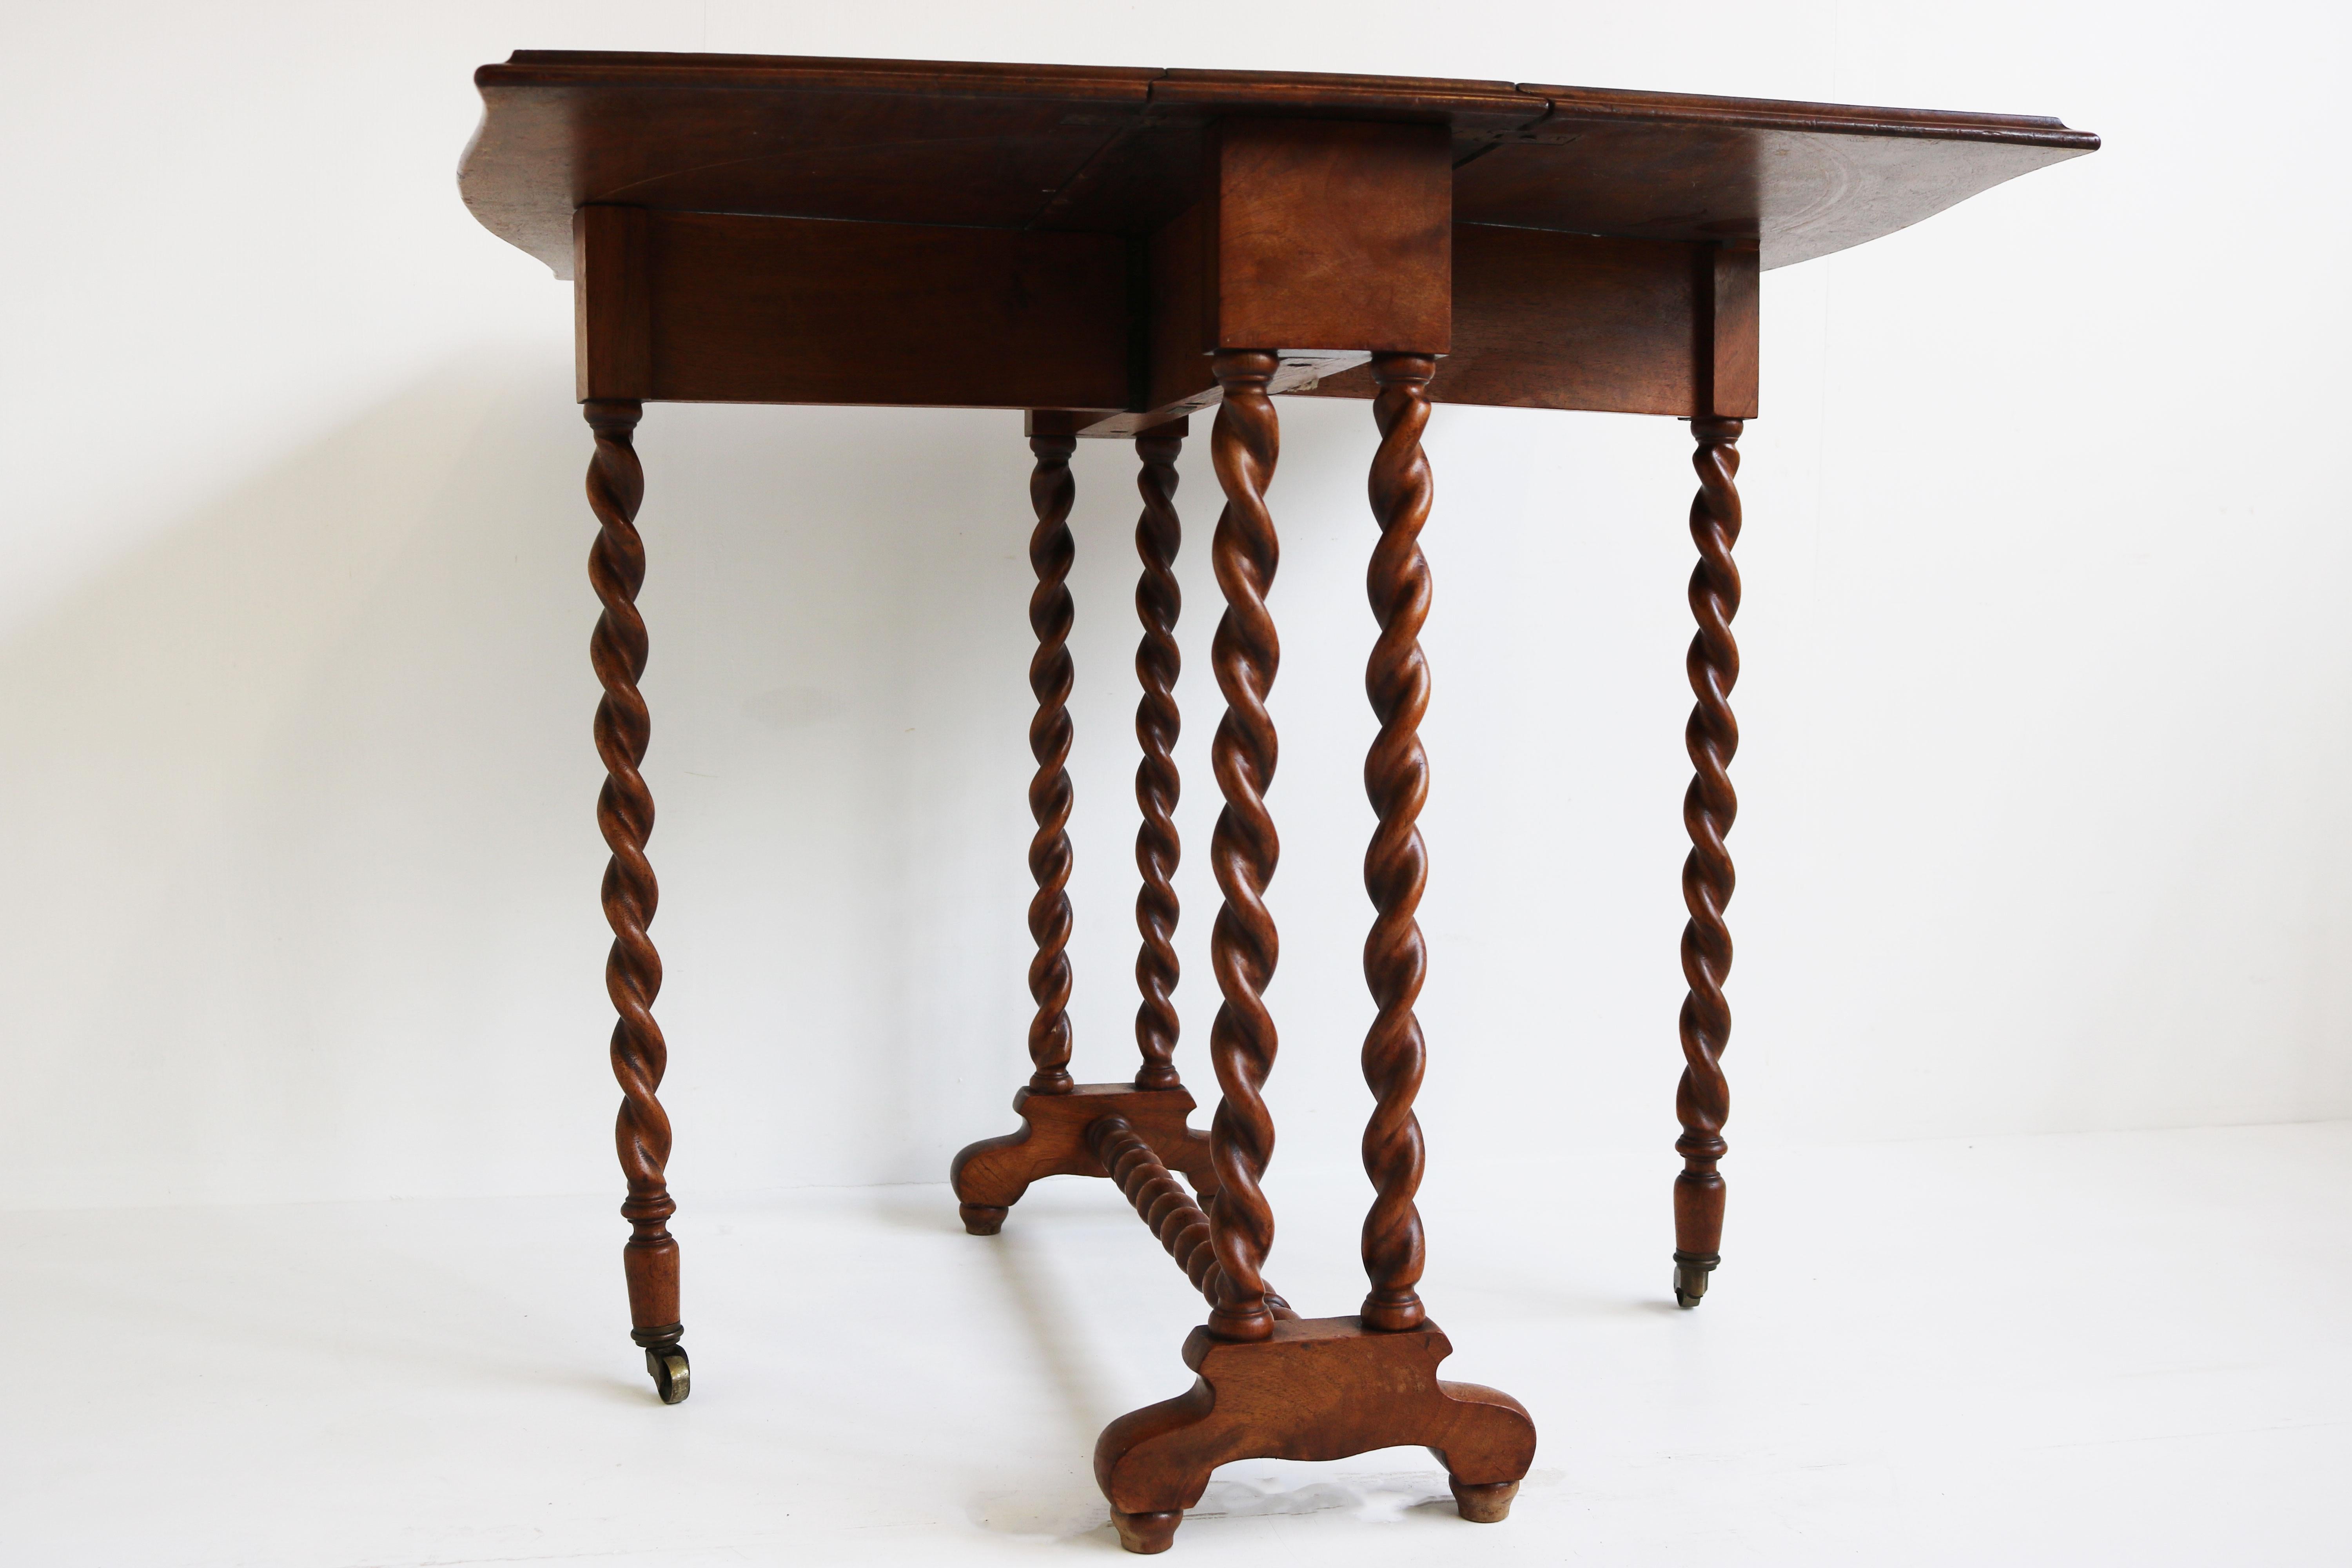 Antique English Barley Twist Foldable Table / Gate-Leg Table 19th Century Burl For Sale 6